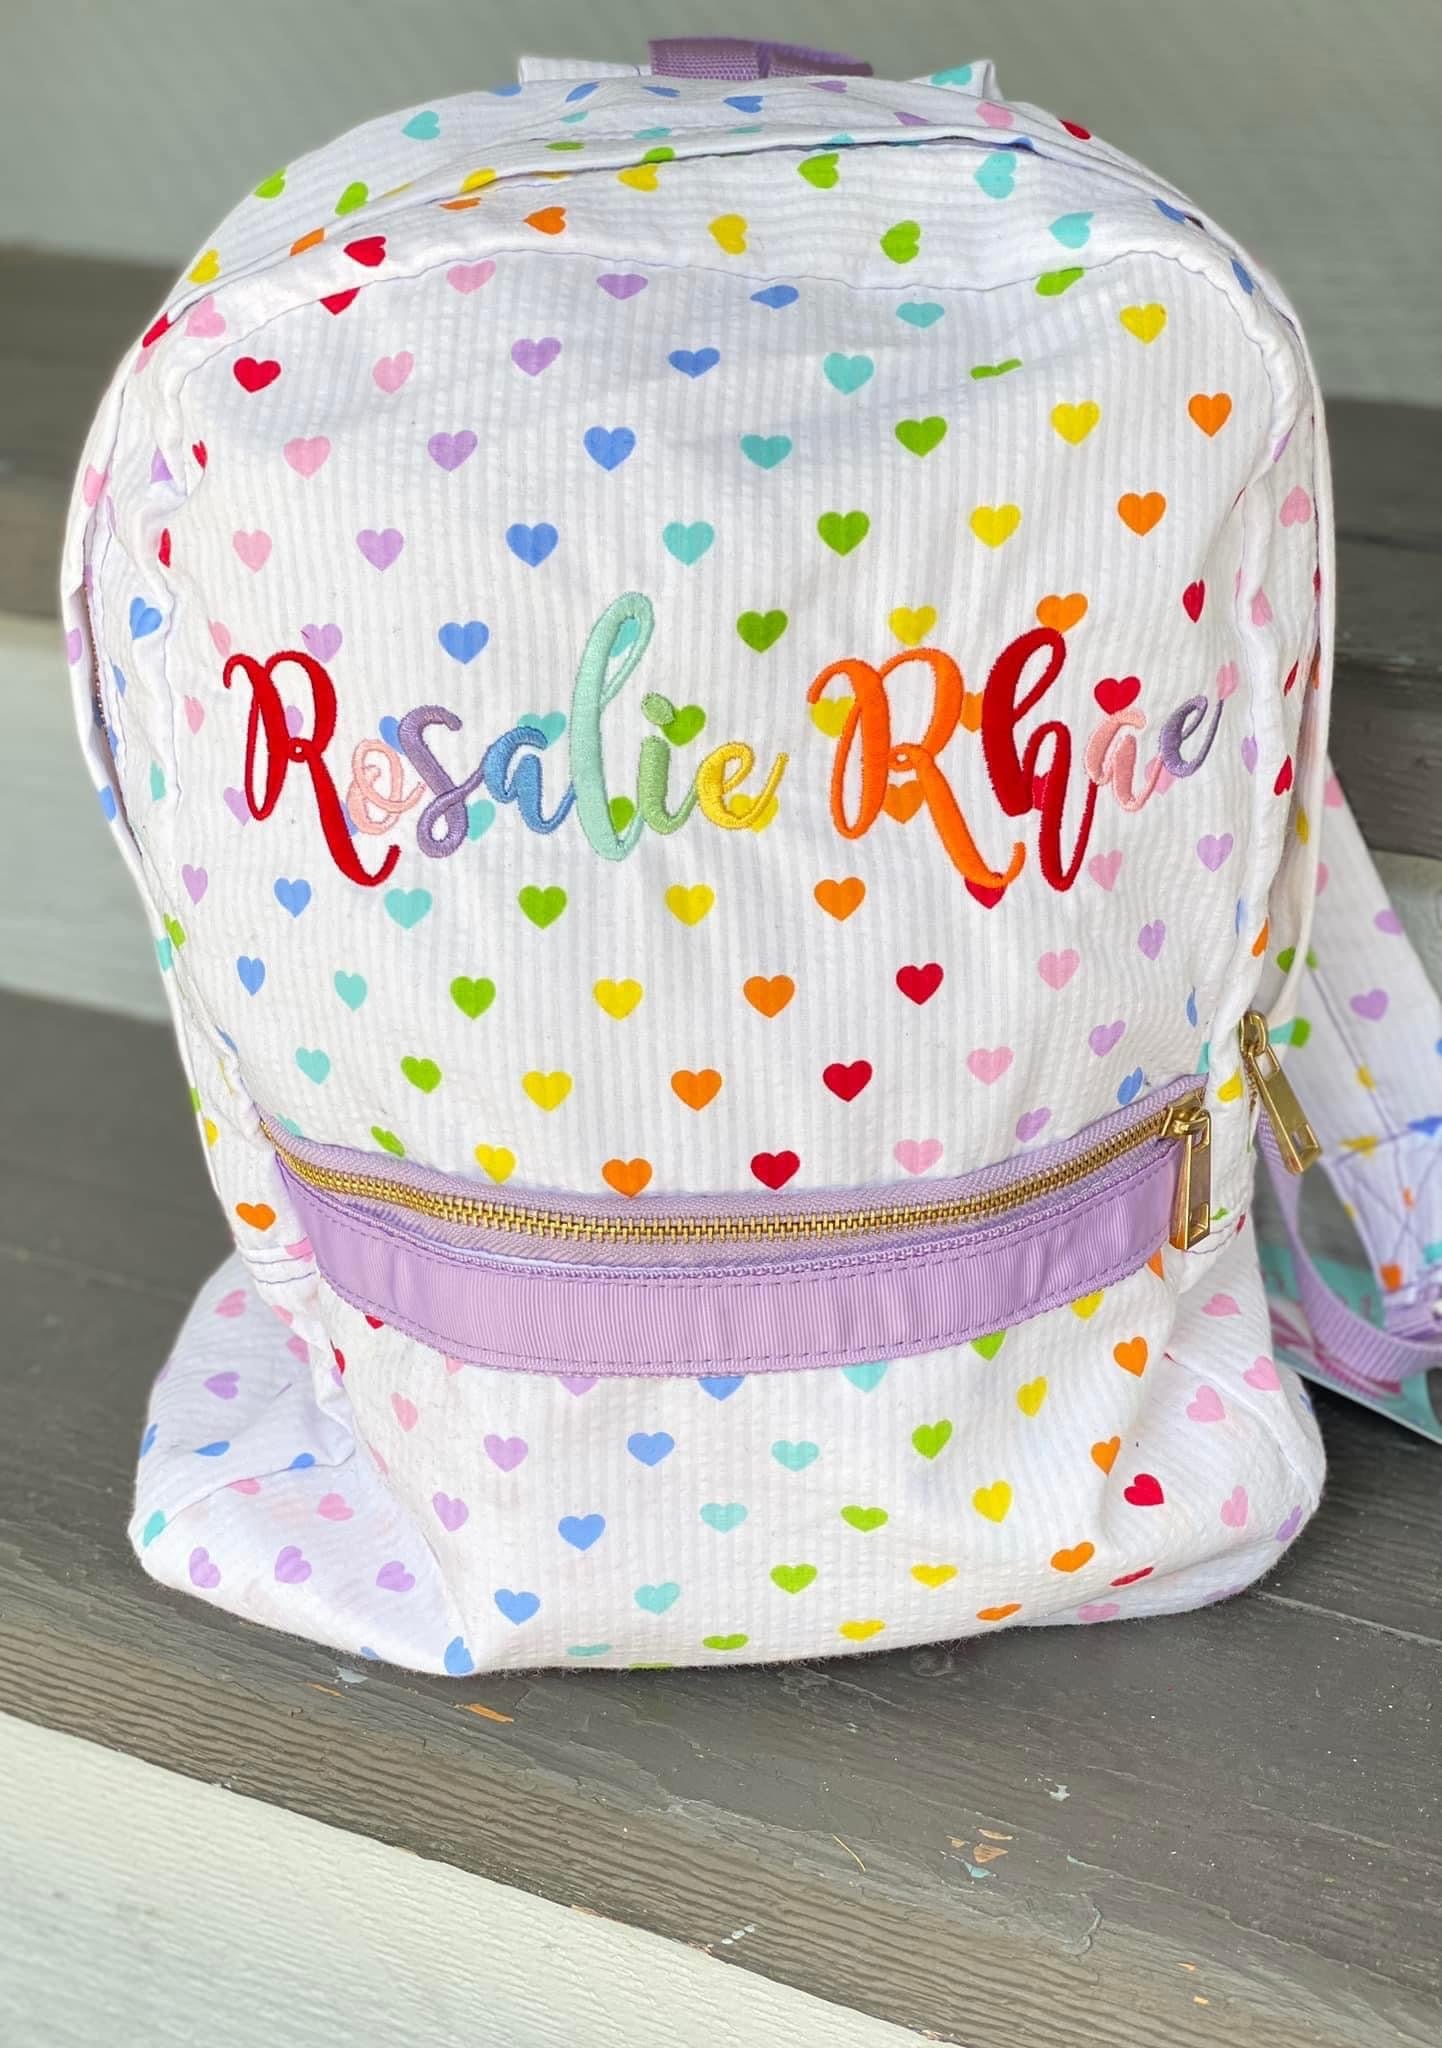 Rainbow Hearts Backpack